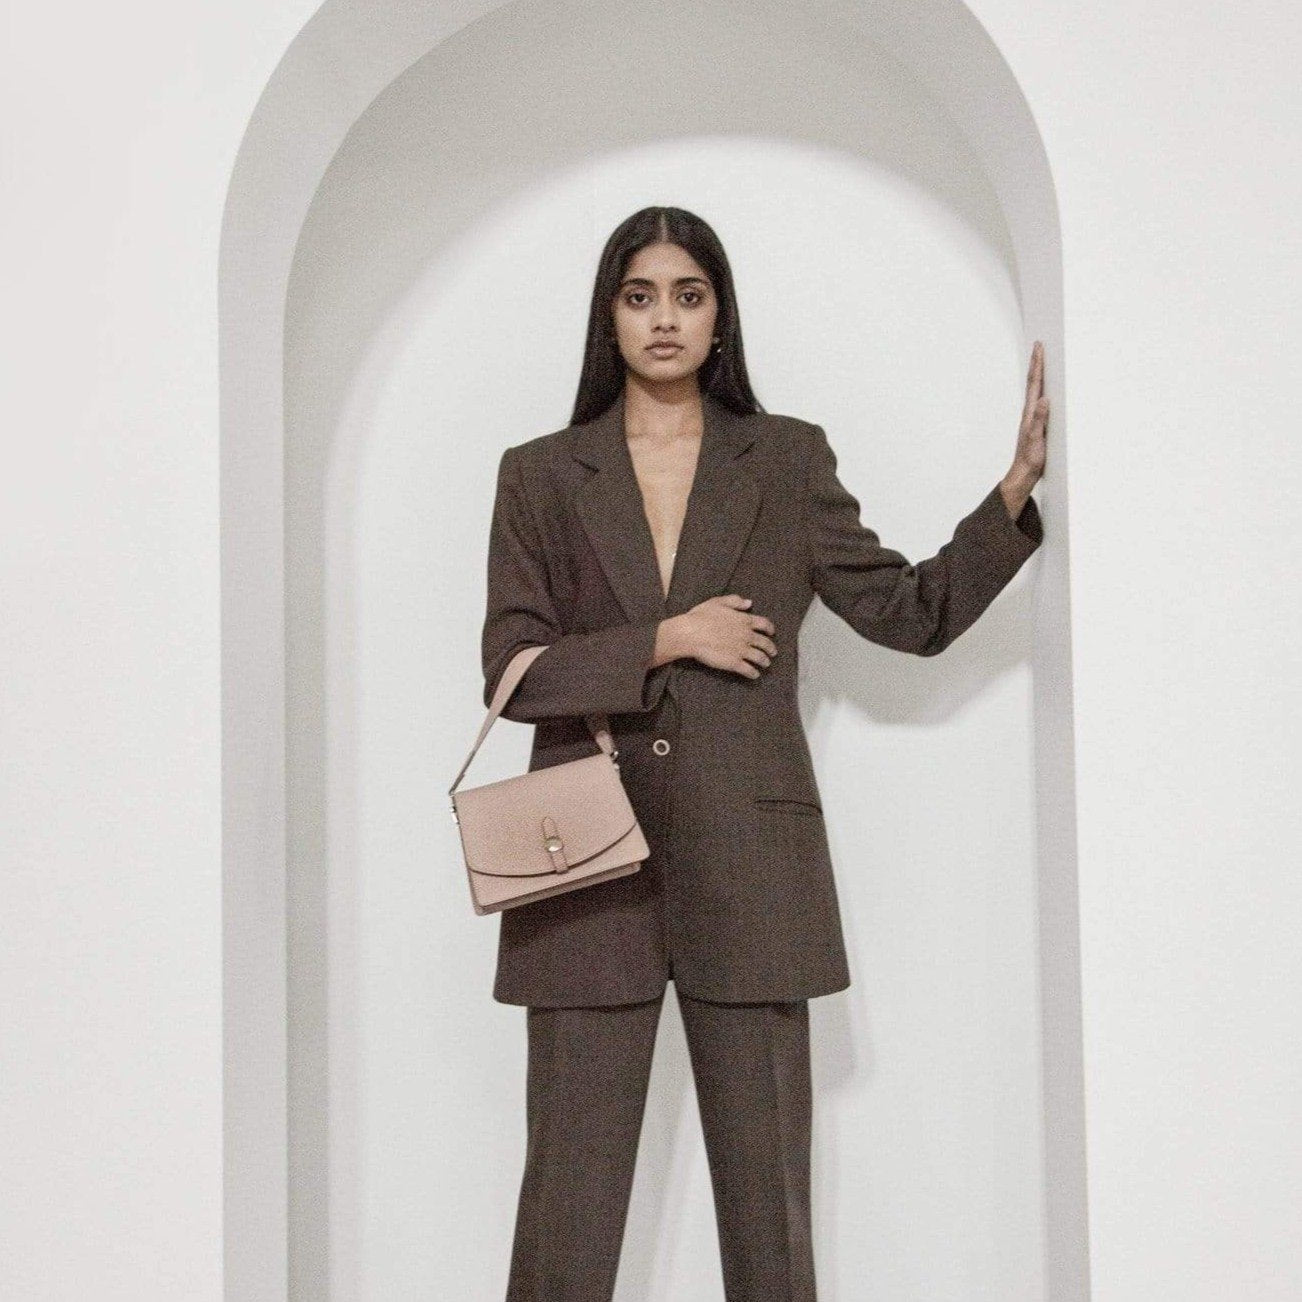 Model in suit holding bag